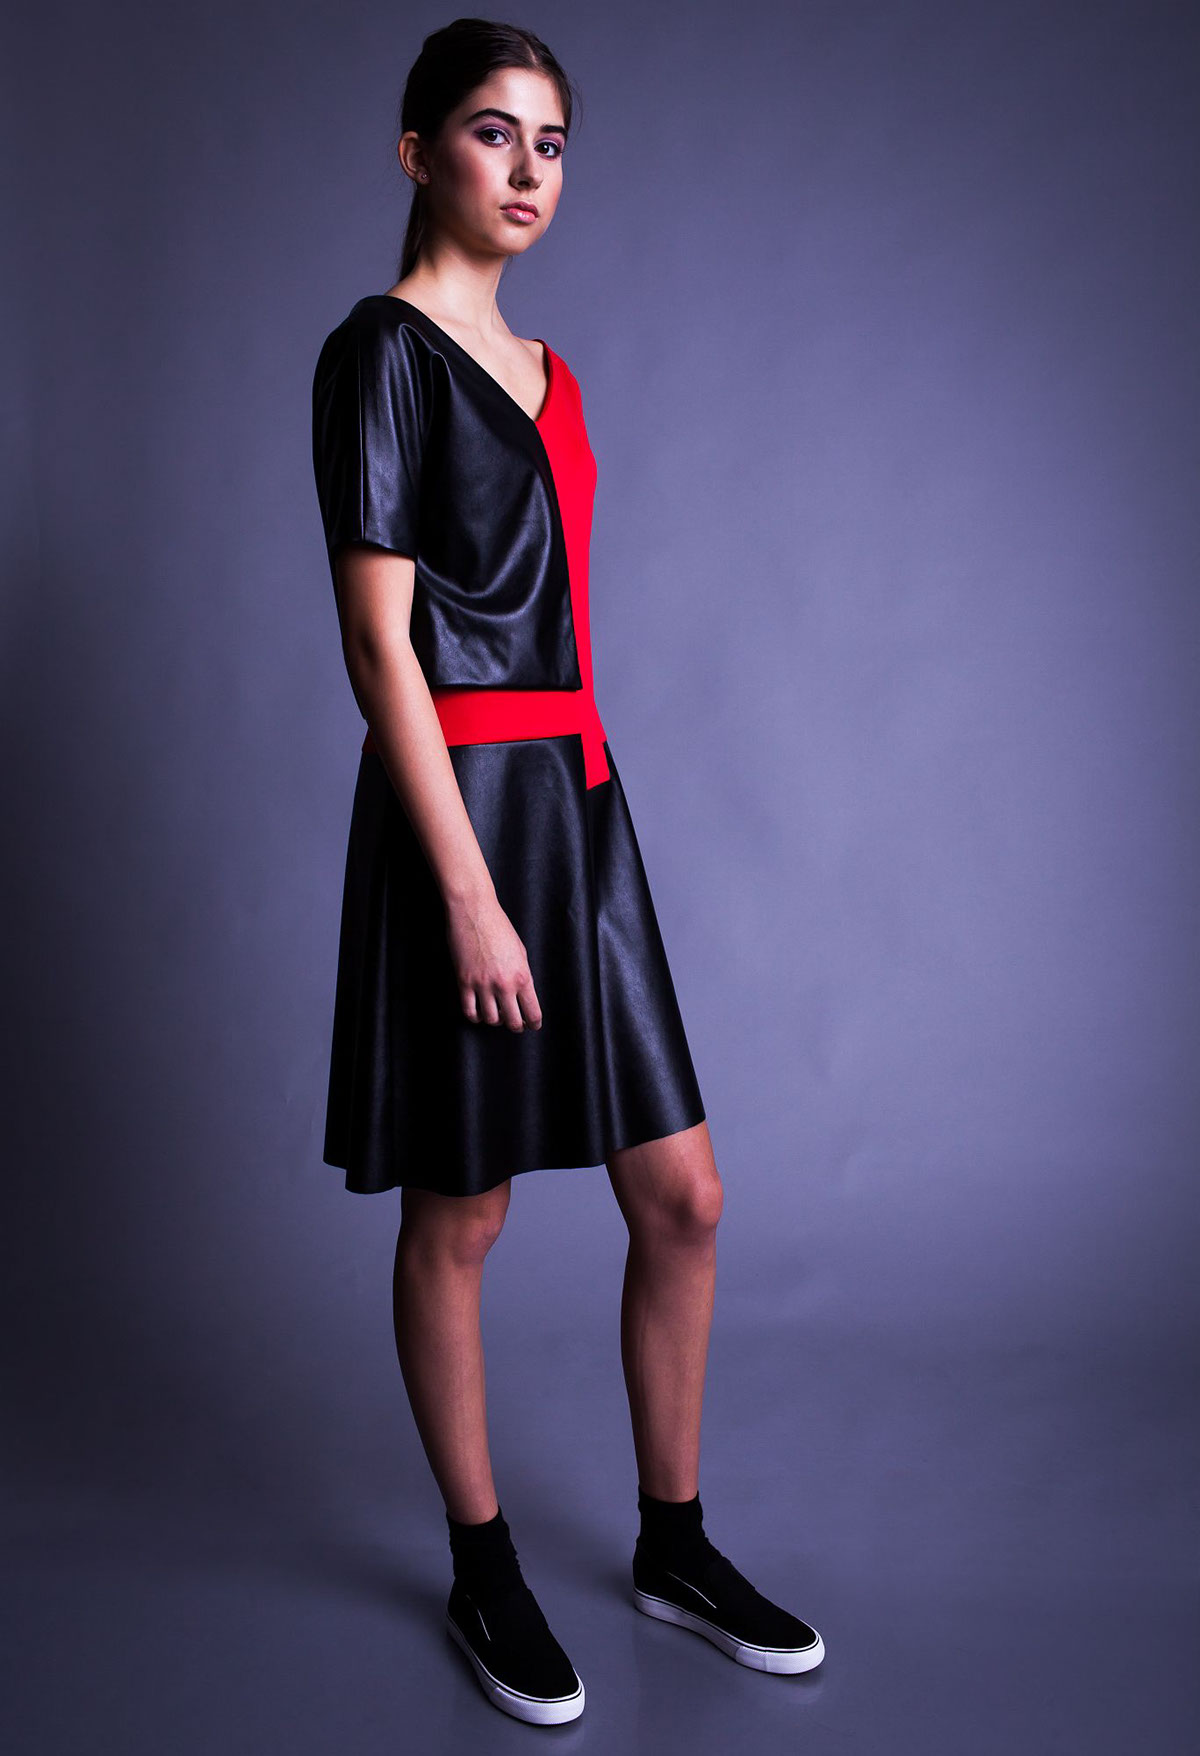 bauhaus red black dress object Fashion 